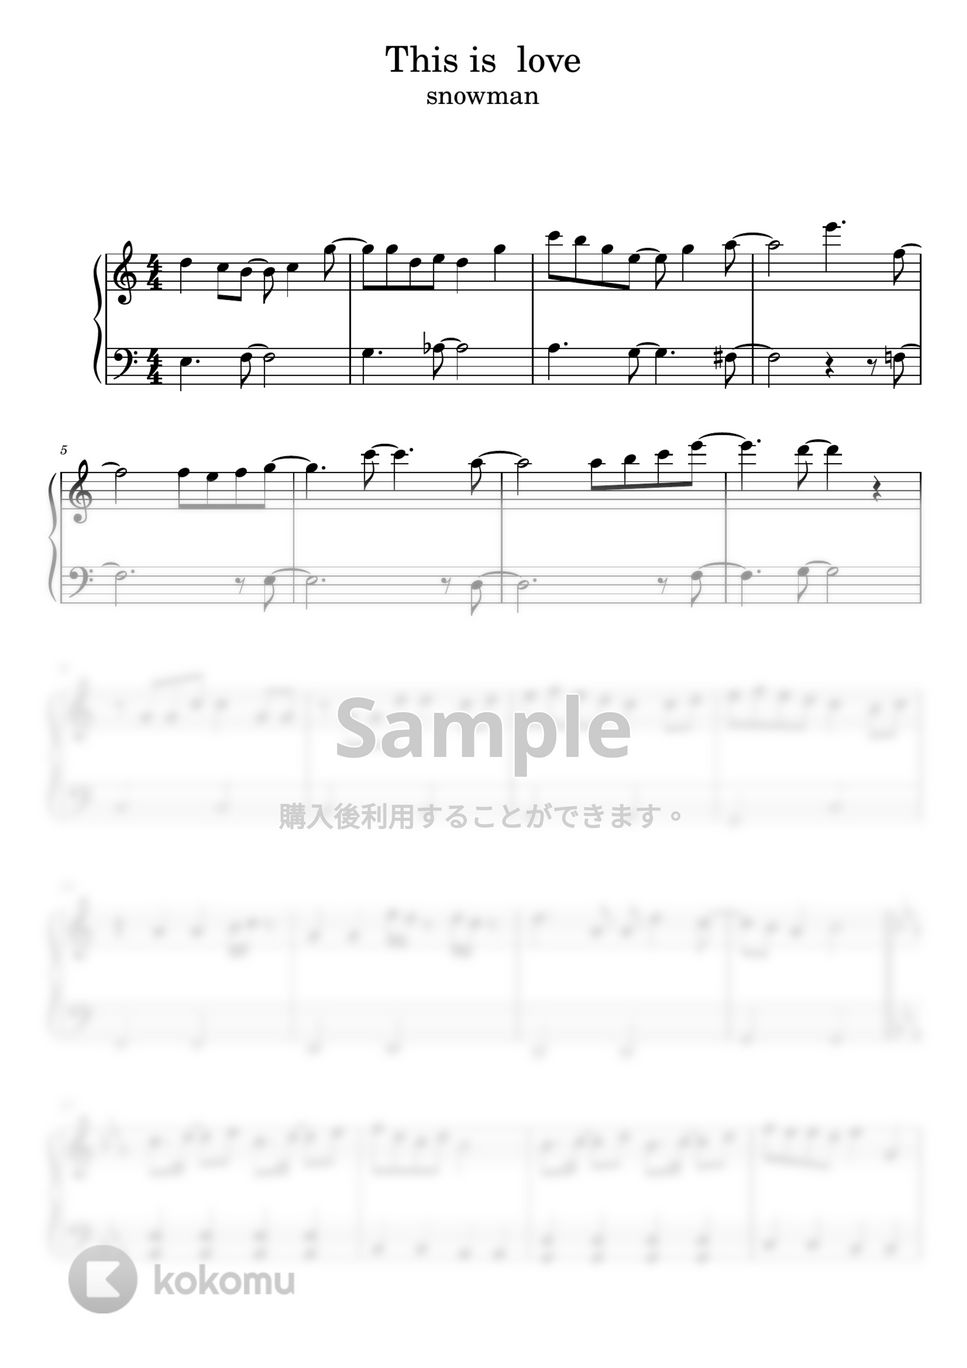 snowman - This is LOVE (ピアノソロ初中級) by pianon楽譜